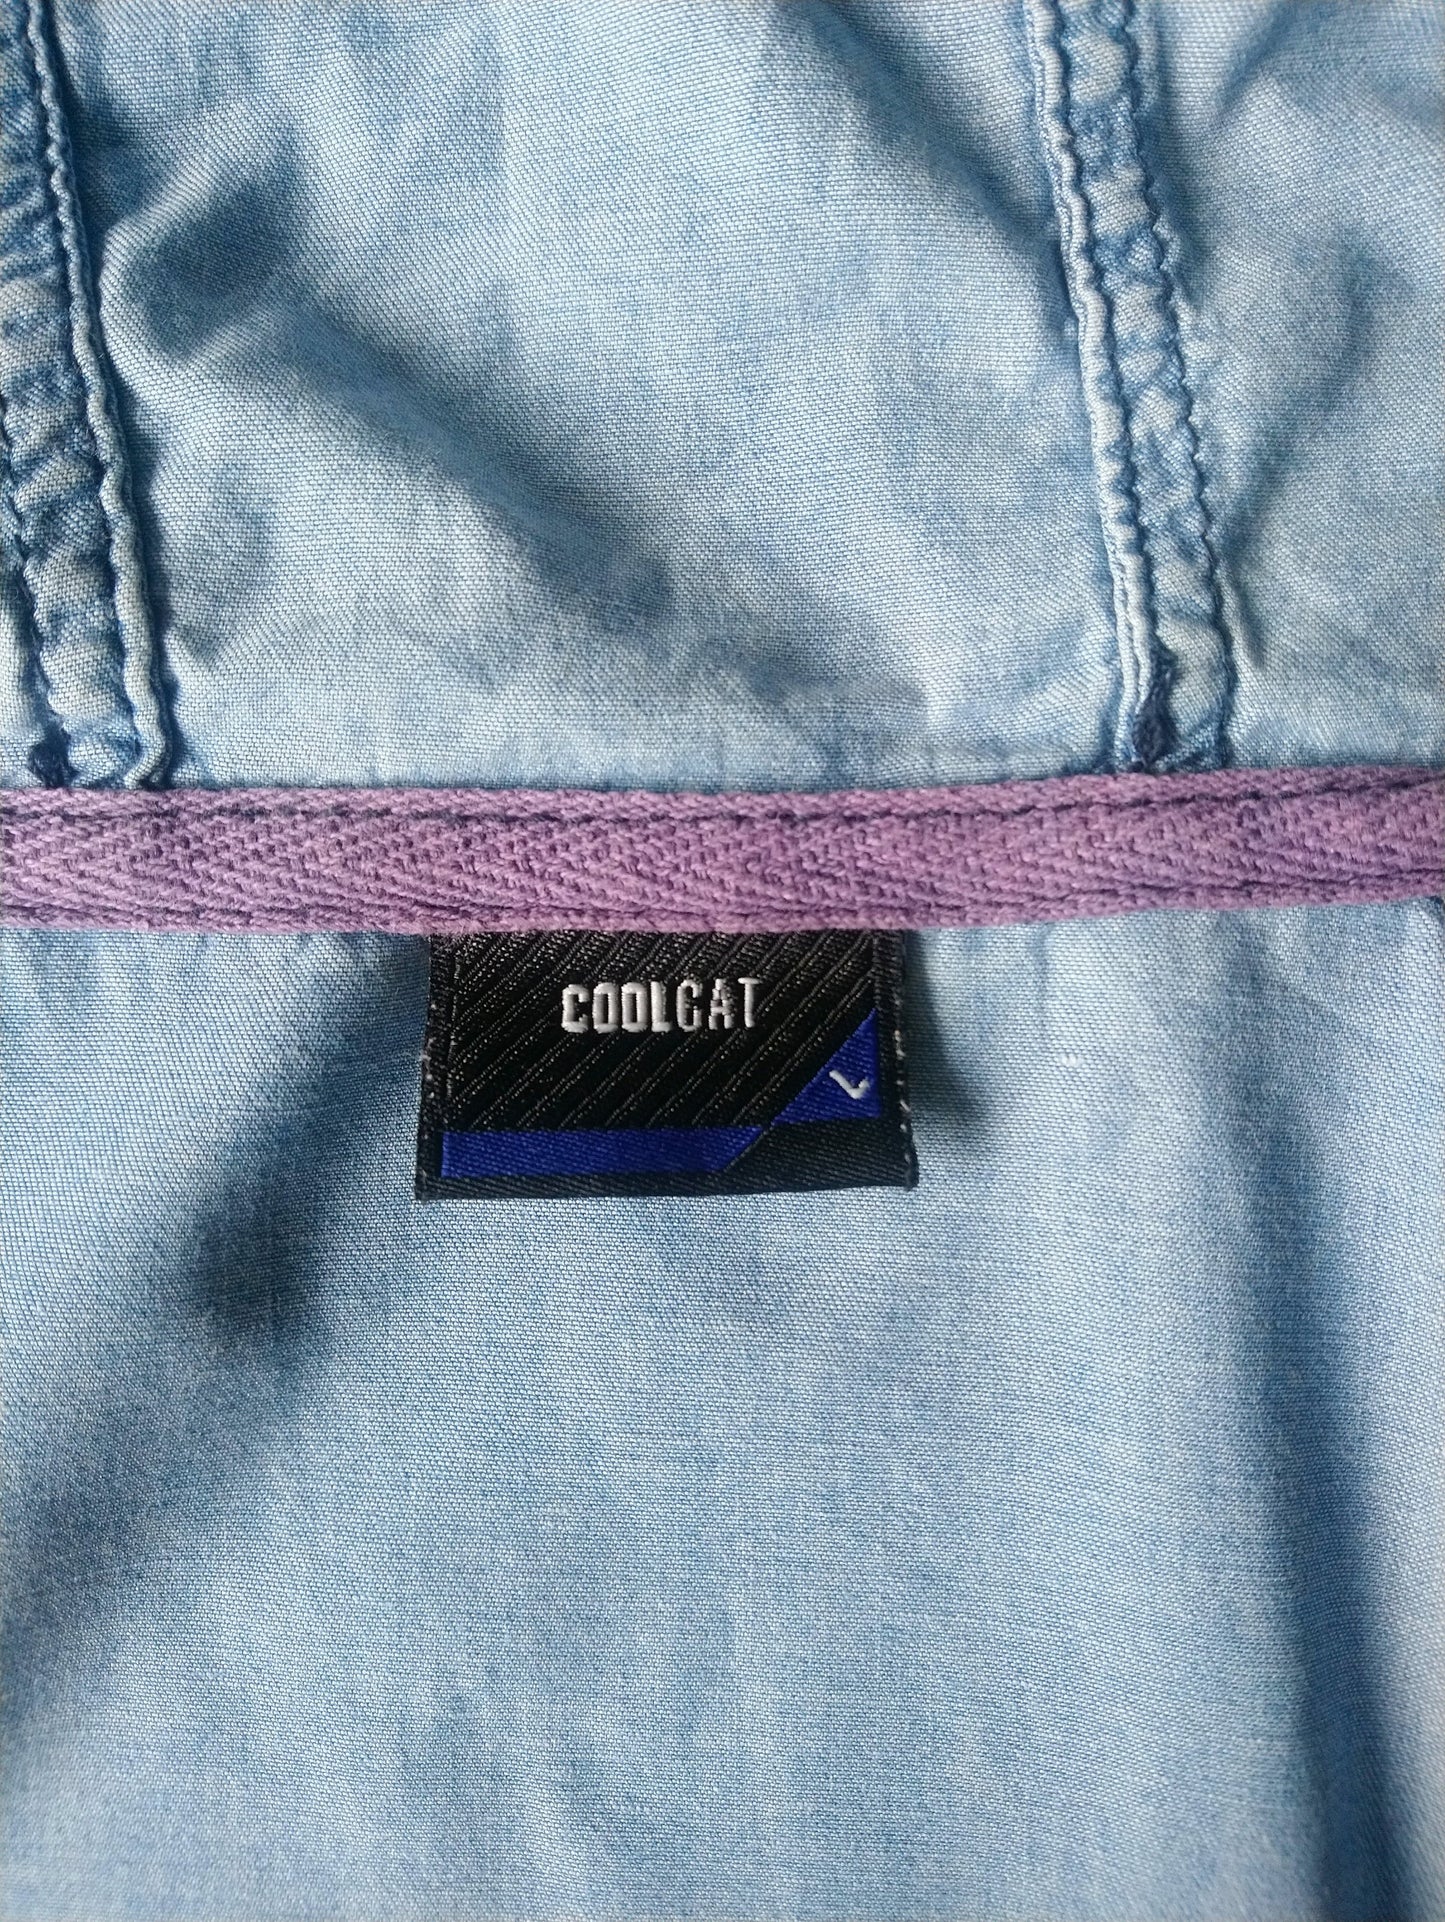 CoolCat shirt with hood. Blue denim. Size L.